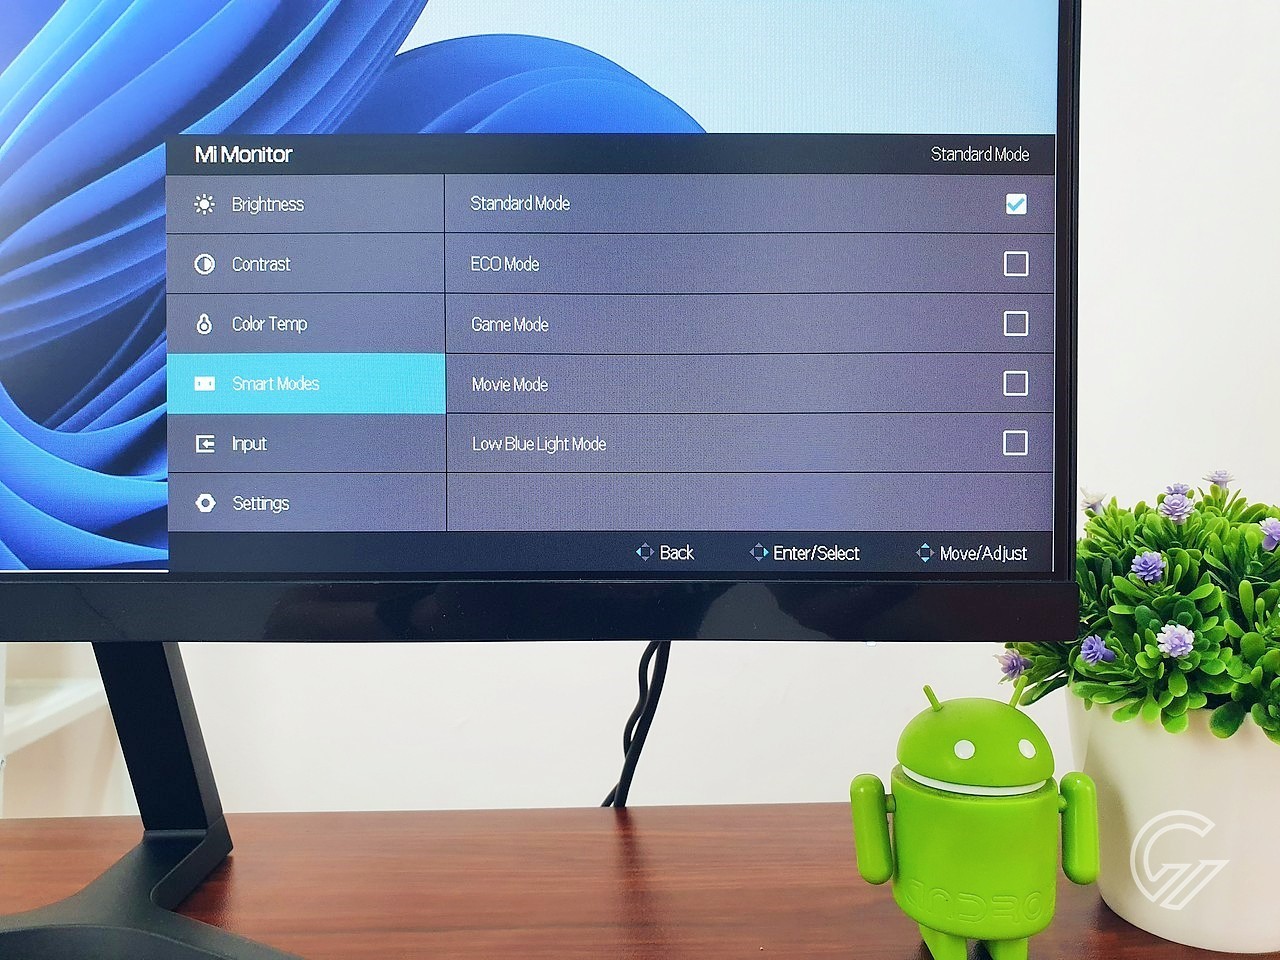 Xiaomi Desktop Monitor 1a 23.8